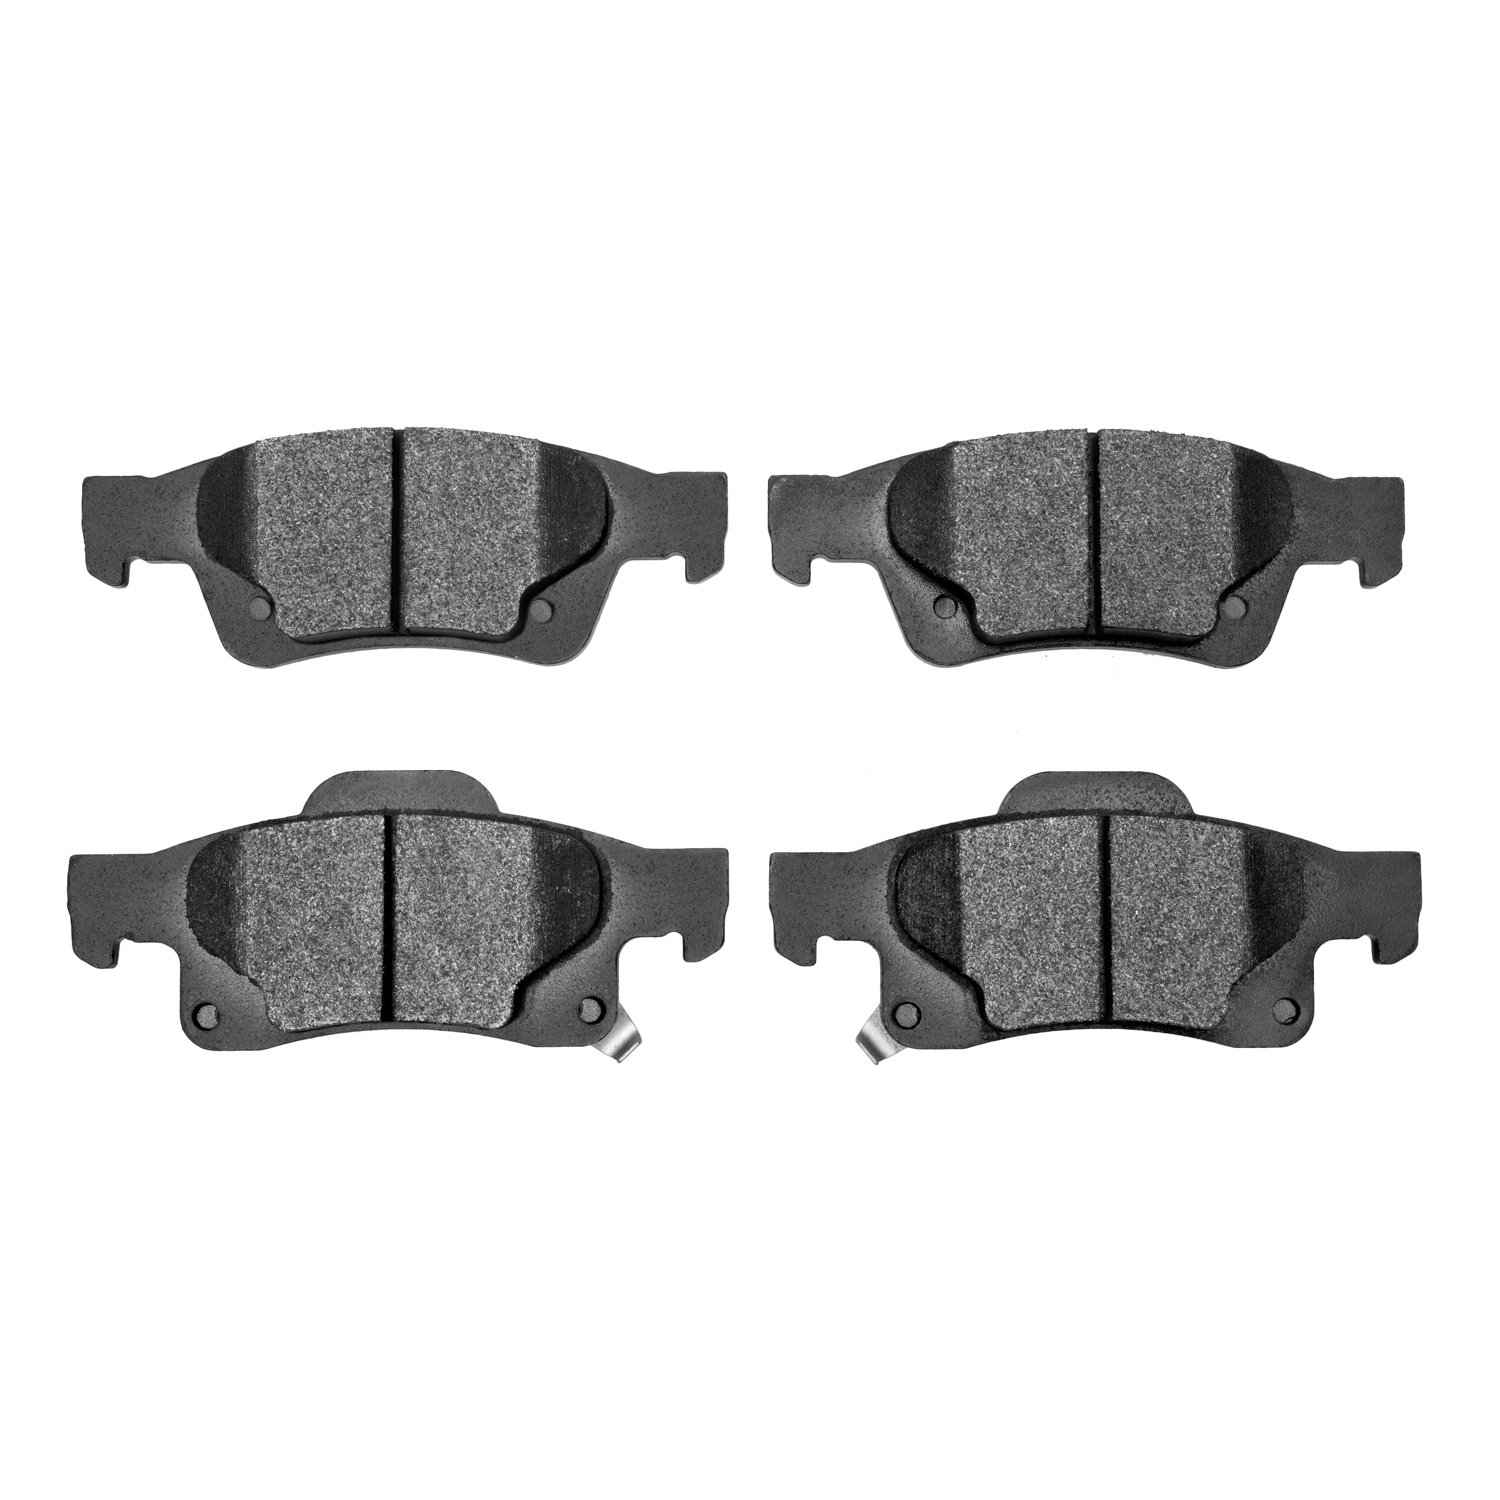 1310-1498-00 3000-Series Ceramic Brake Pads, Fits Select Mopar, Position: Rear